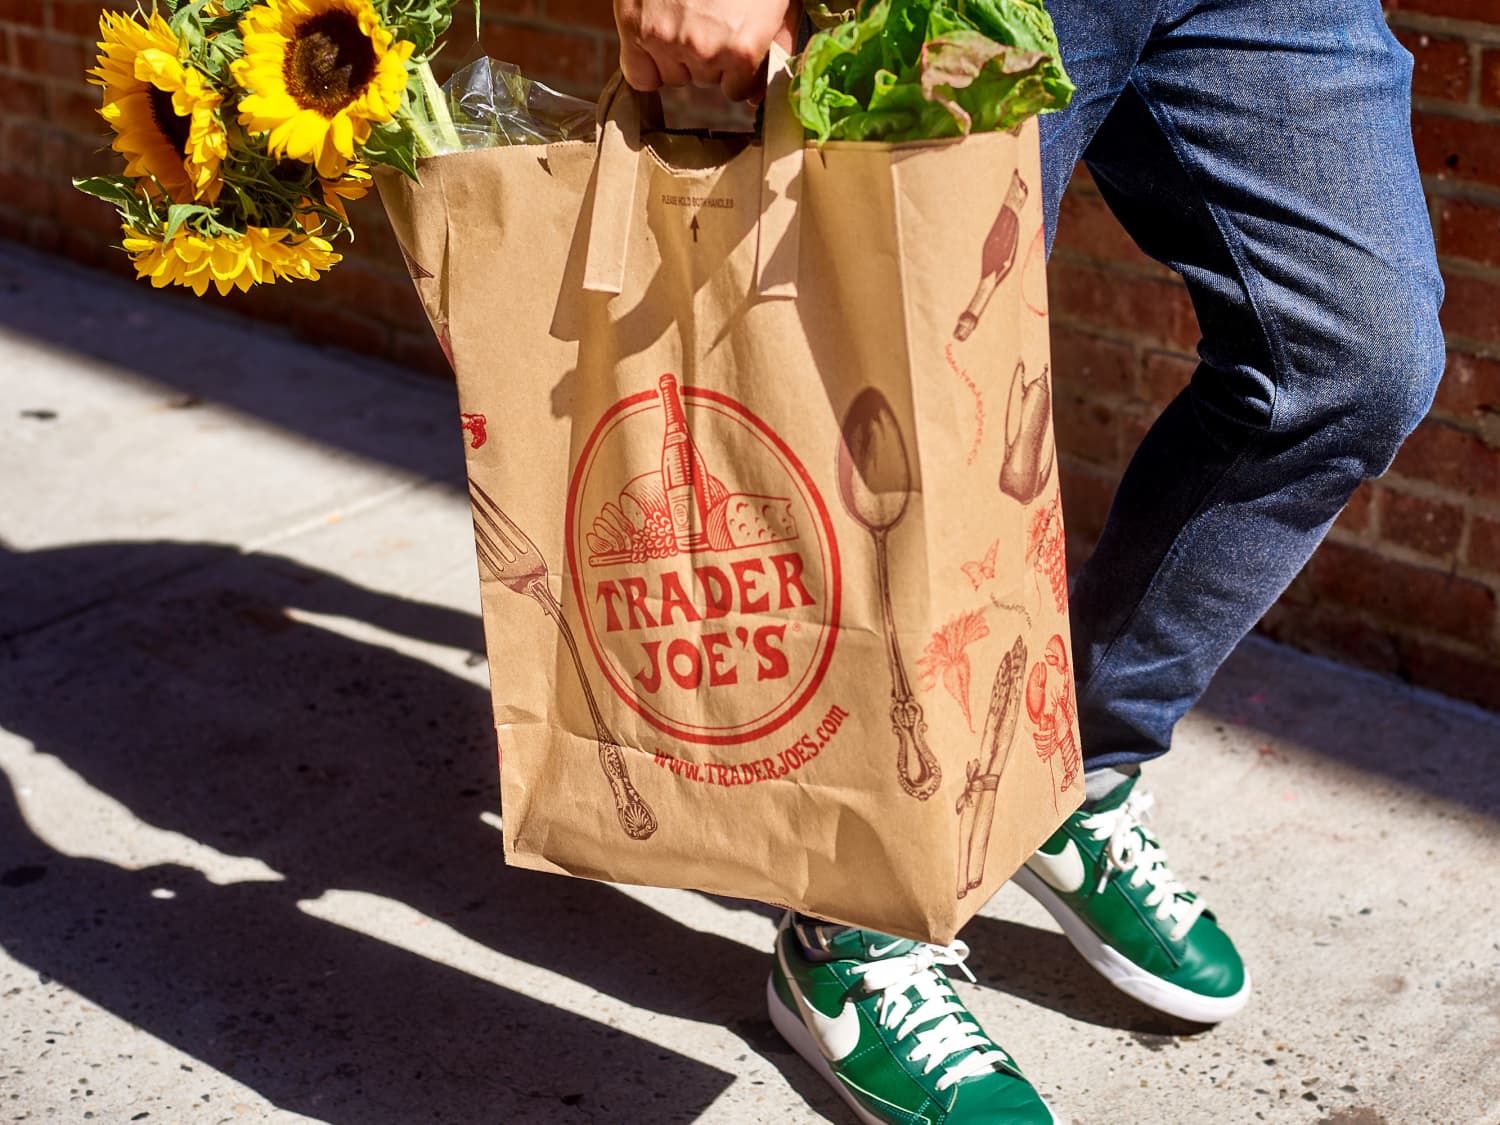 Trader Joe's Bag of Organic Fuji Apples – We'll Get The Food